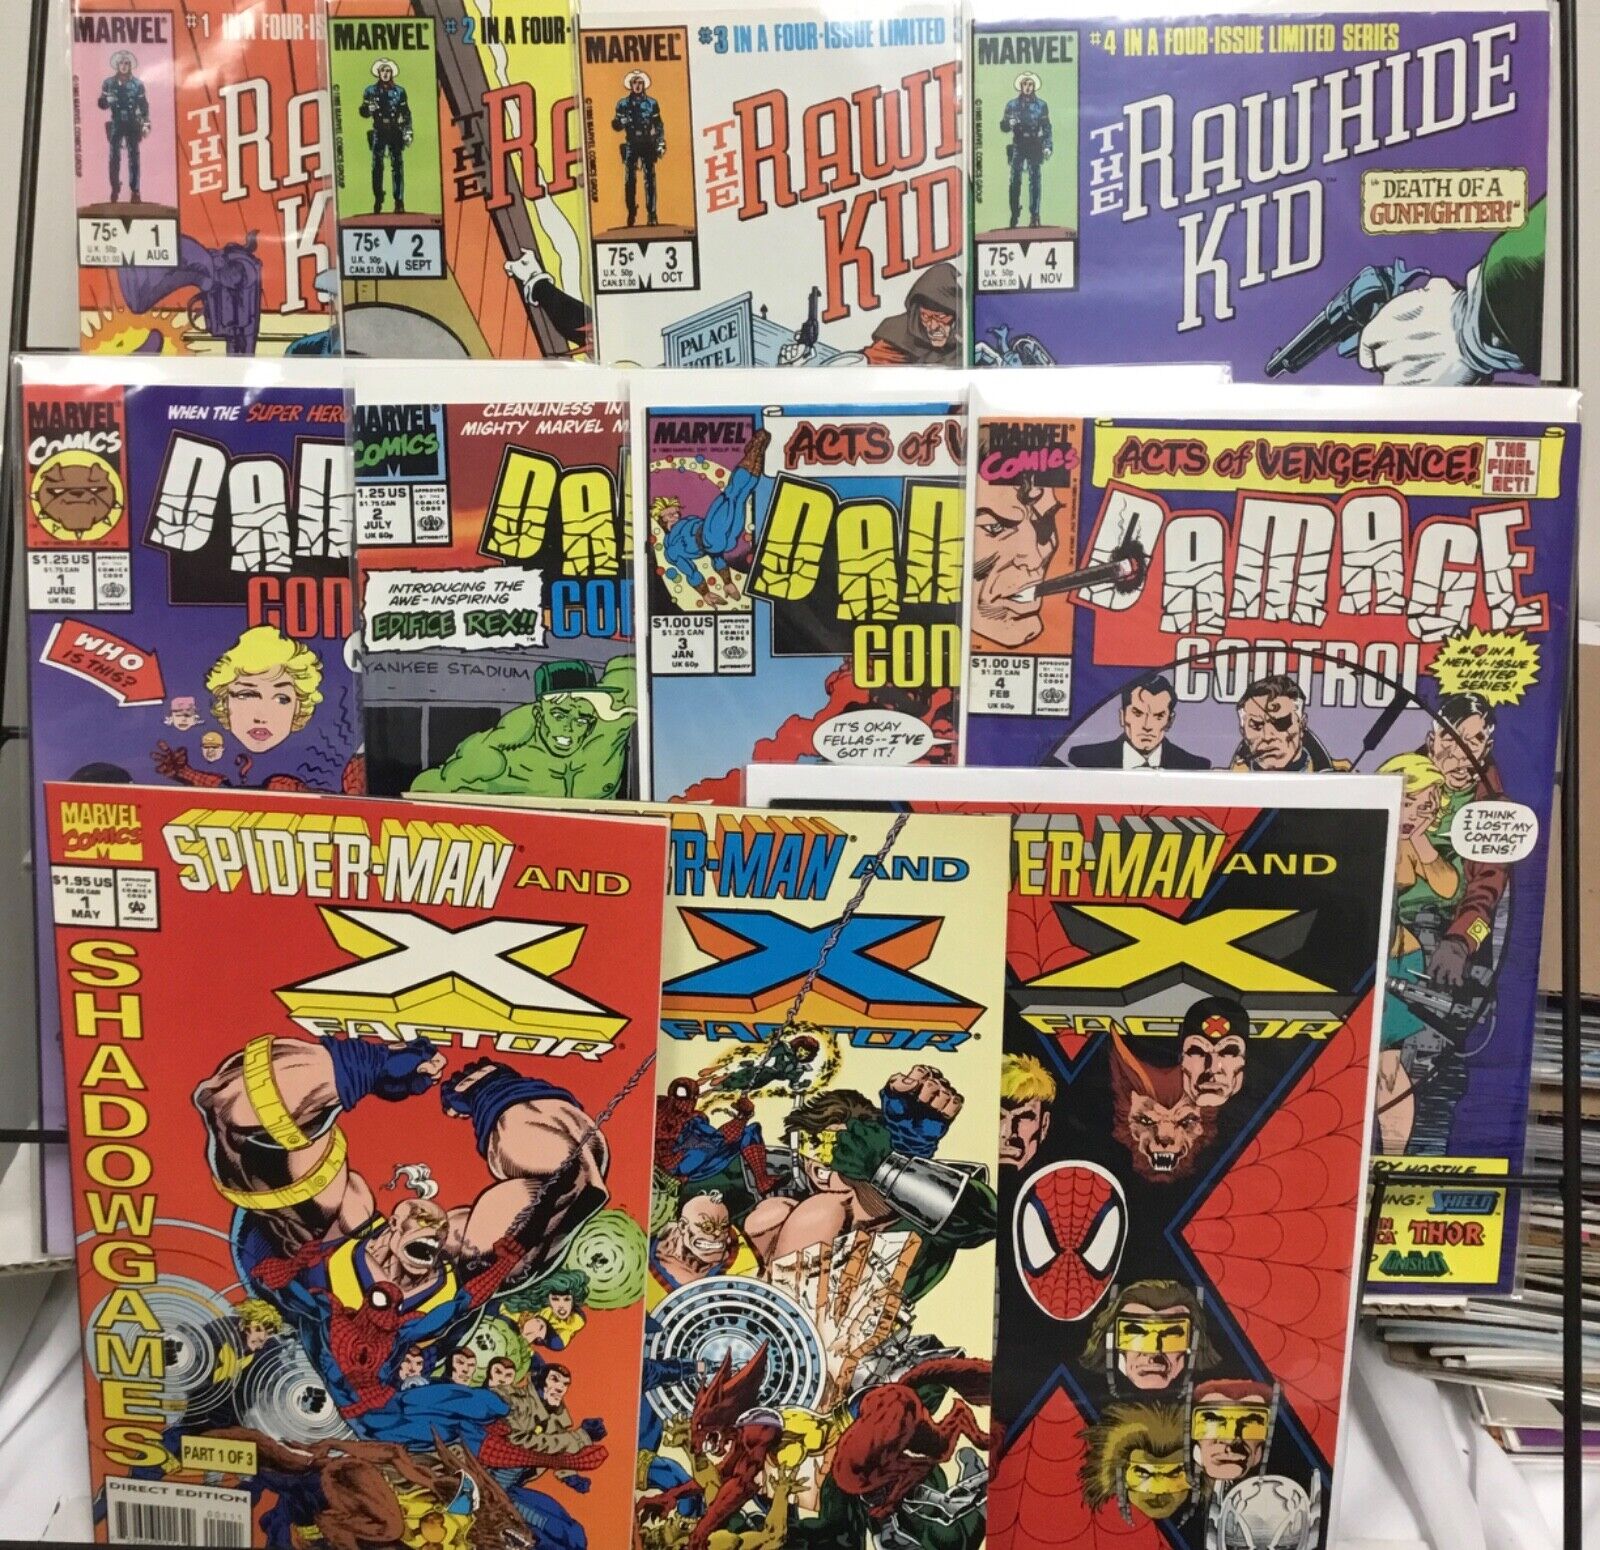 Marvel Comics Rawhide Kid 1-4, Damage Control 1-4, Spider-Man & X-Factor 1-3